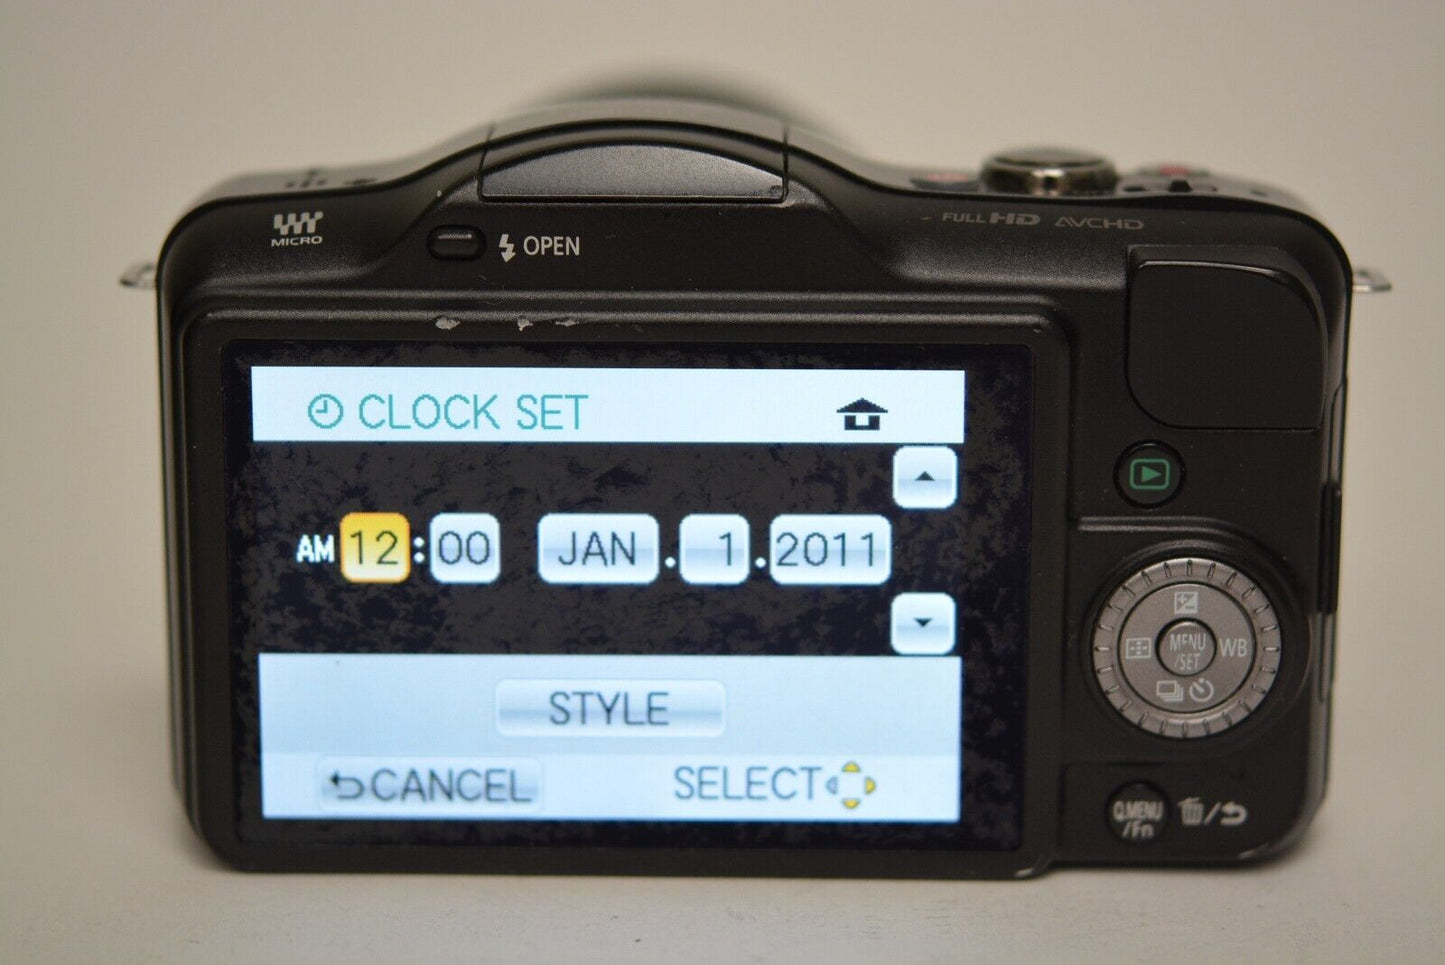 EXC+ PANASONIC LUMIX DMC-GF3 12.1MP DIGITAL w/14-42mm, UV, SD CARD, USB+NEO CASE